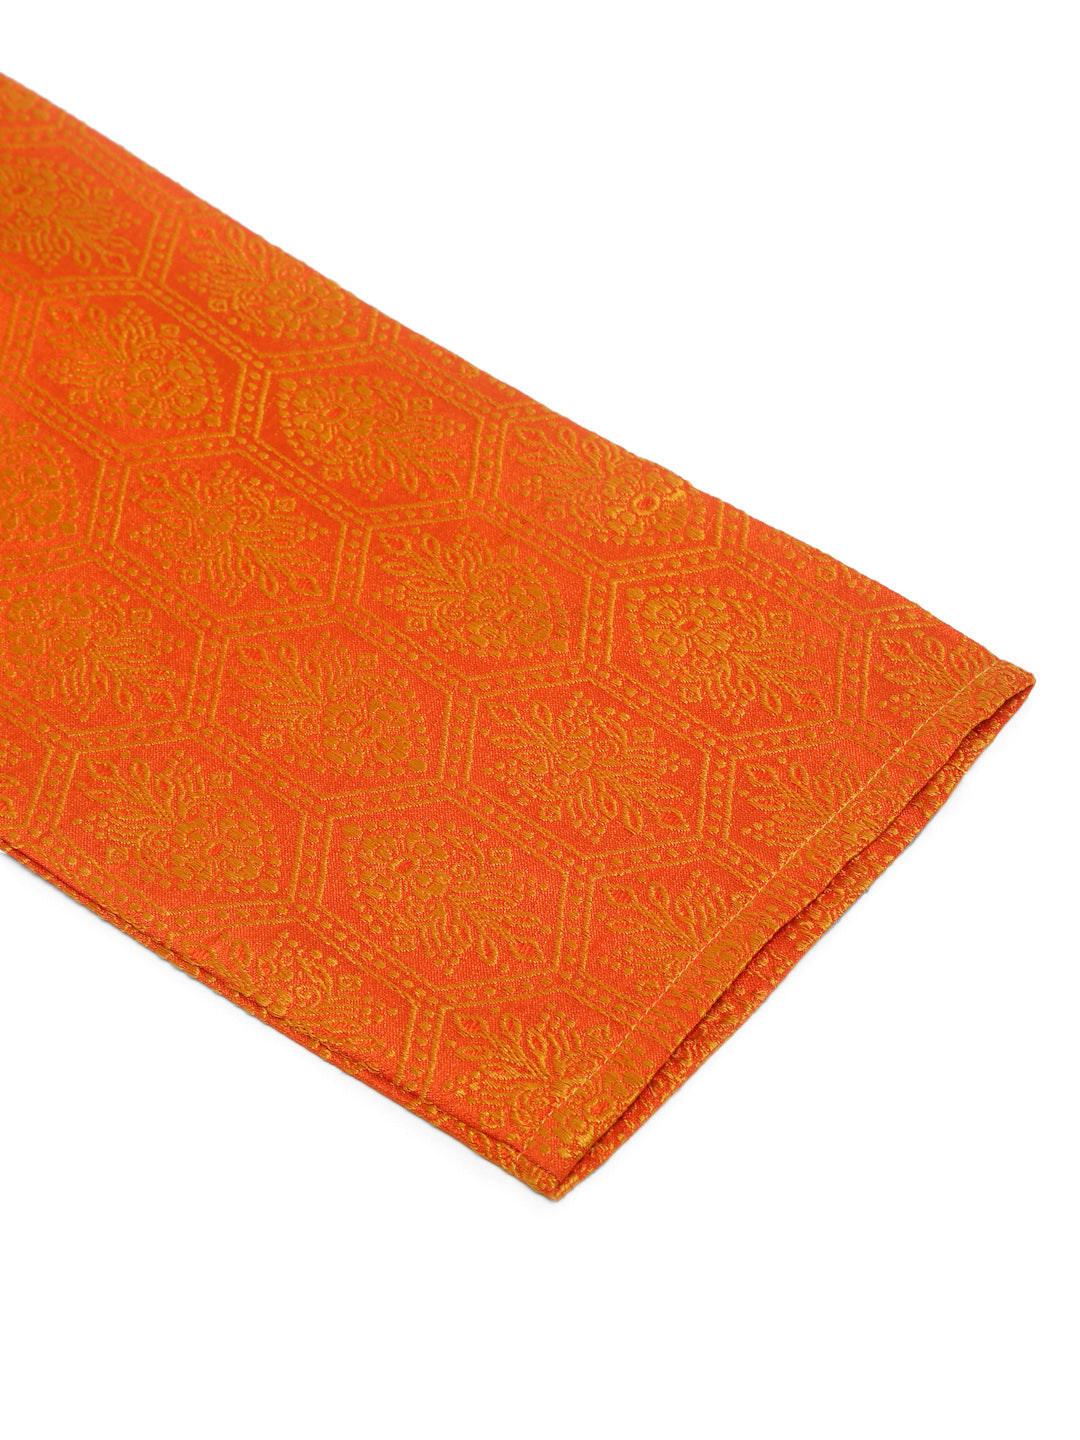 Men's Orange And Golden Woven Design Kurta Only ( Ko 674 Orange ) - Virat Fashions